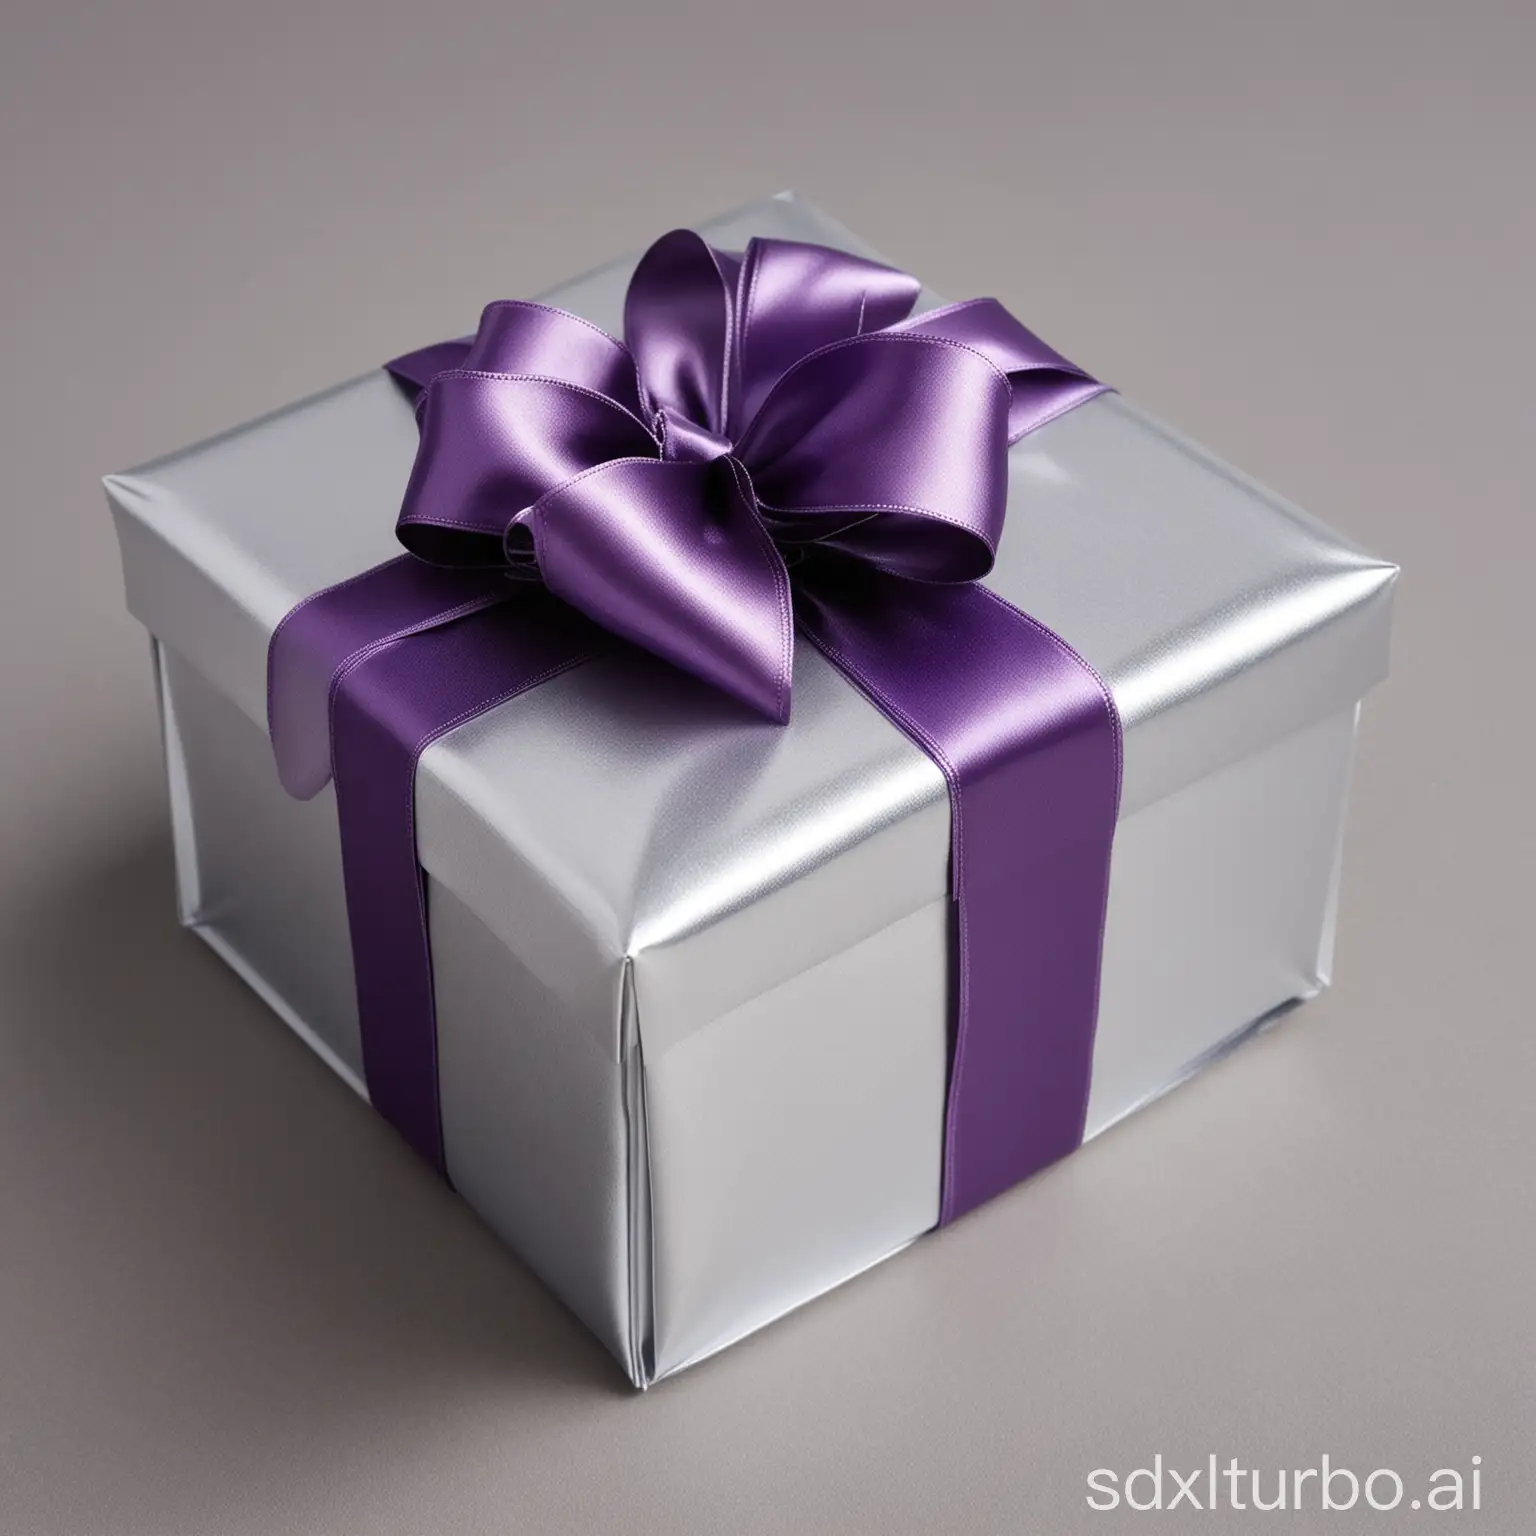 Elegant-Silver-Present-with-Regal-Purple-Ribbon-on-Neutral-Grey-Background